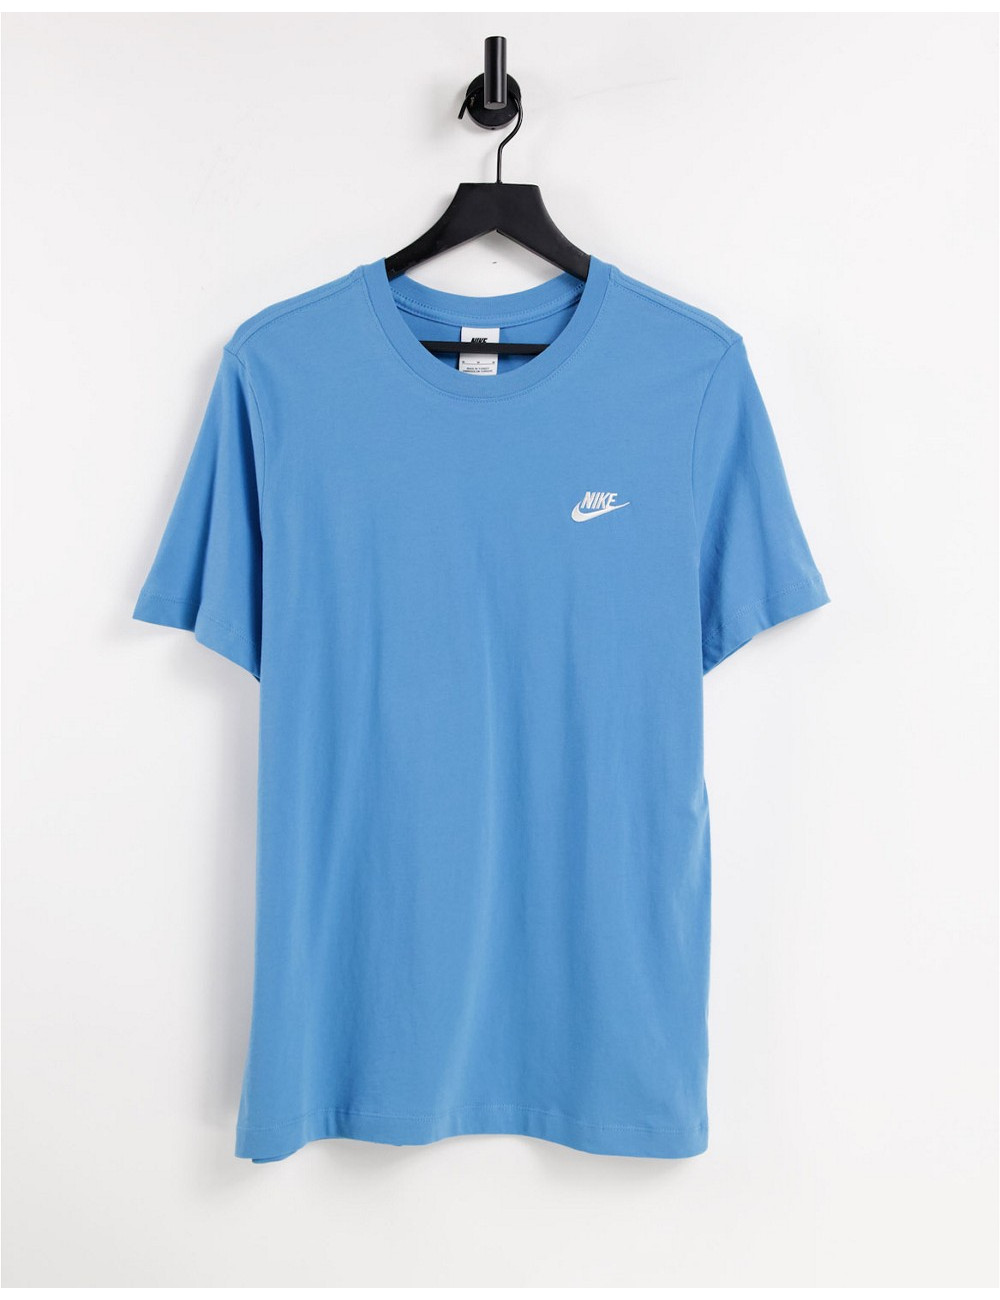 Nike Club t-shirt in dutch...